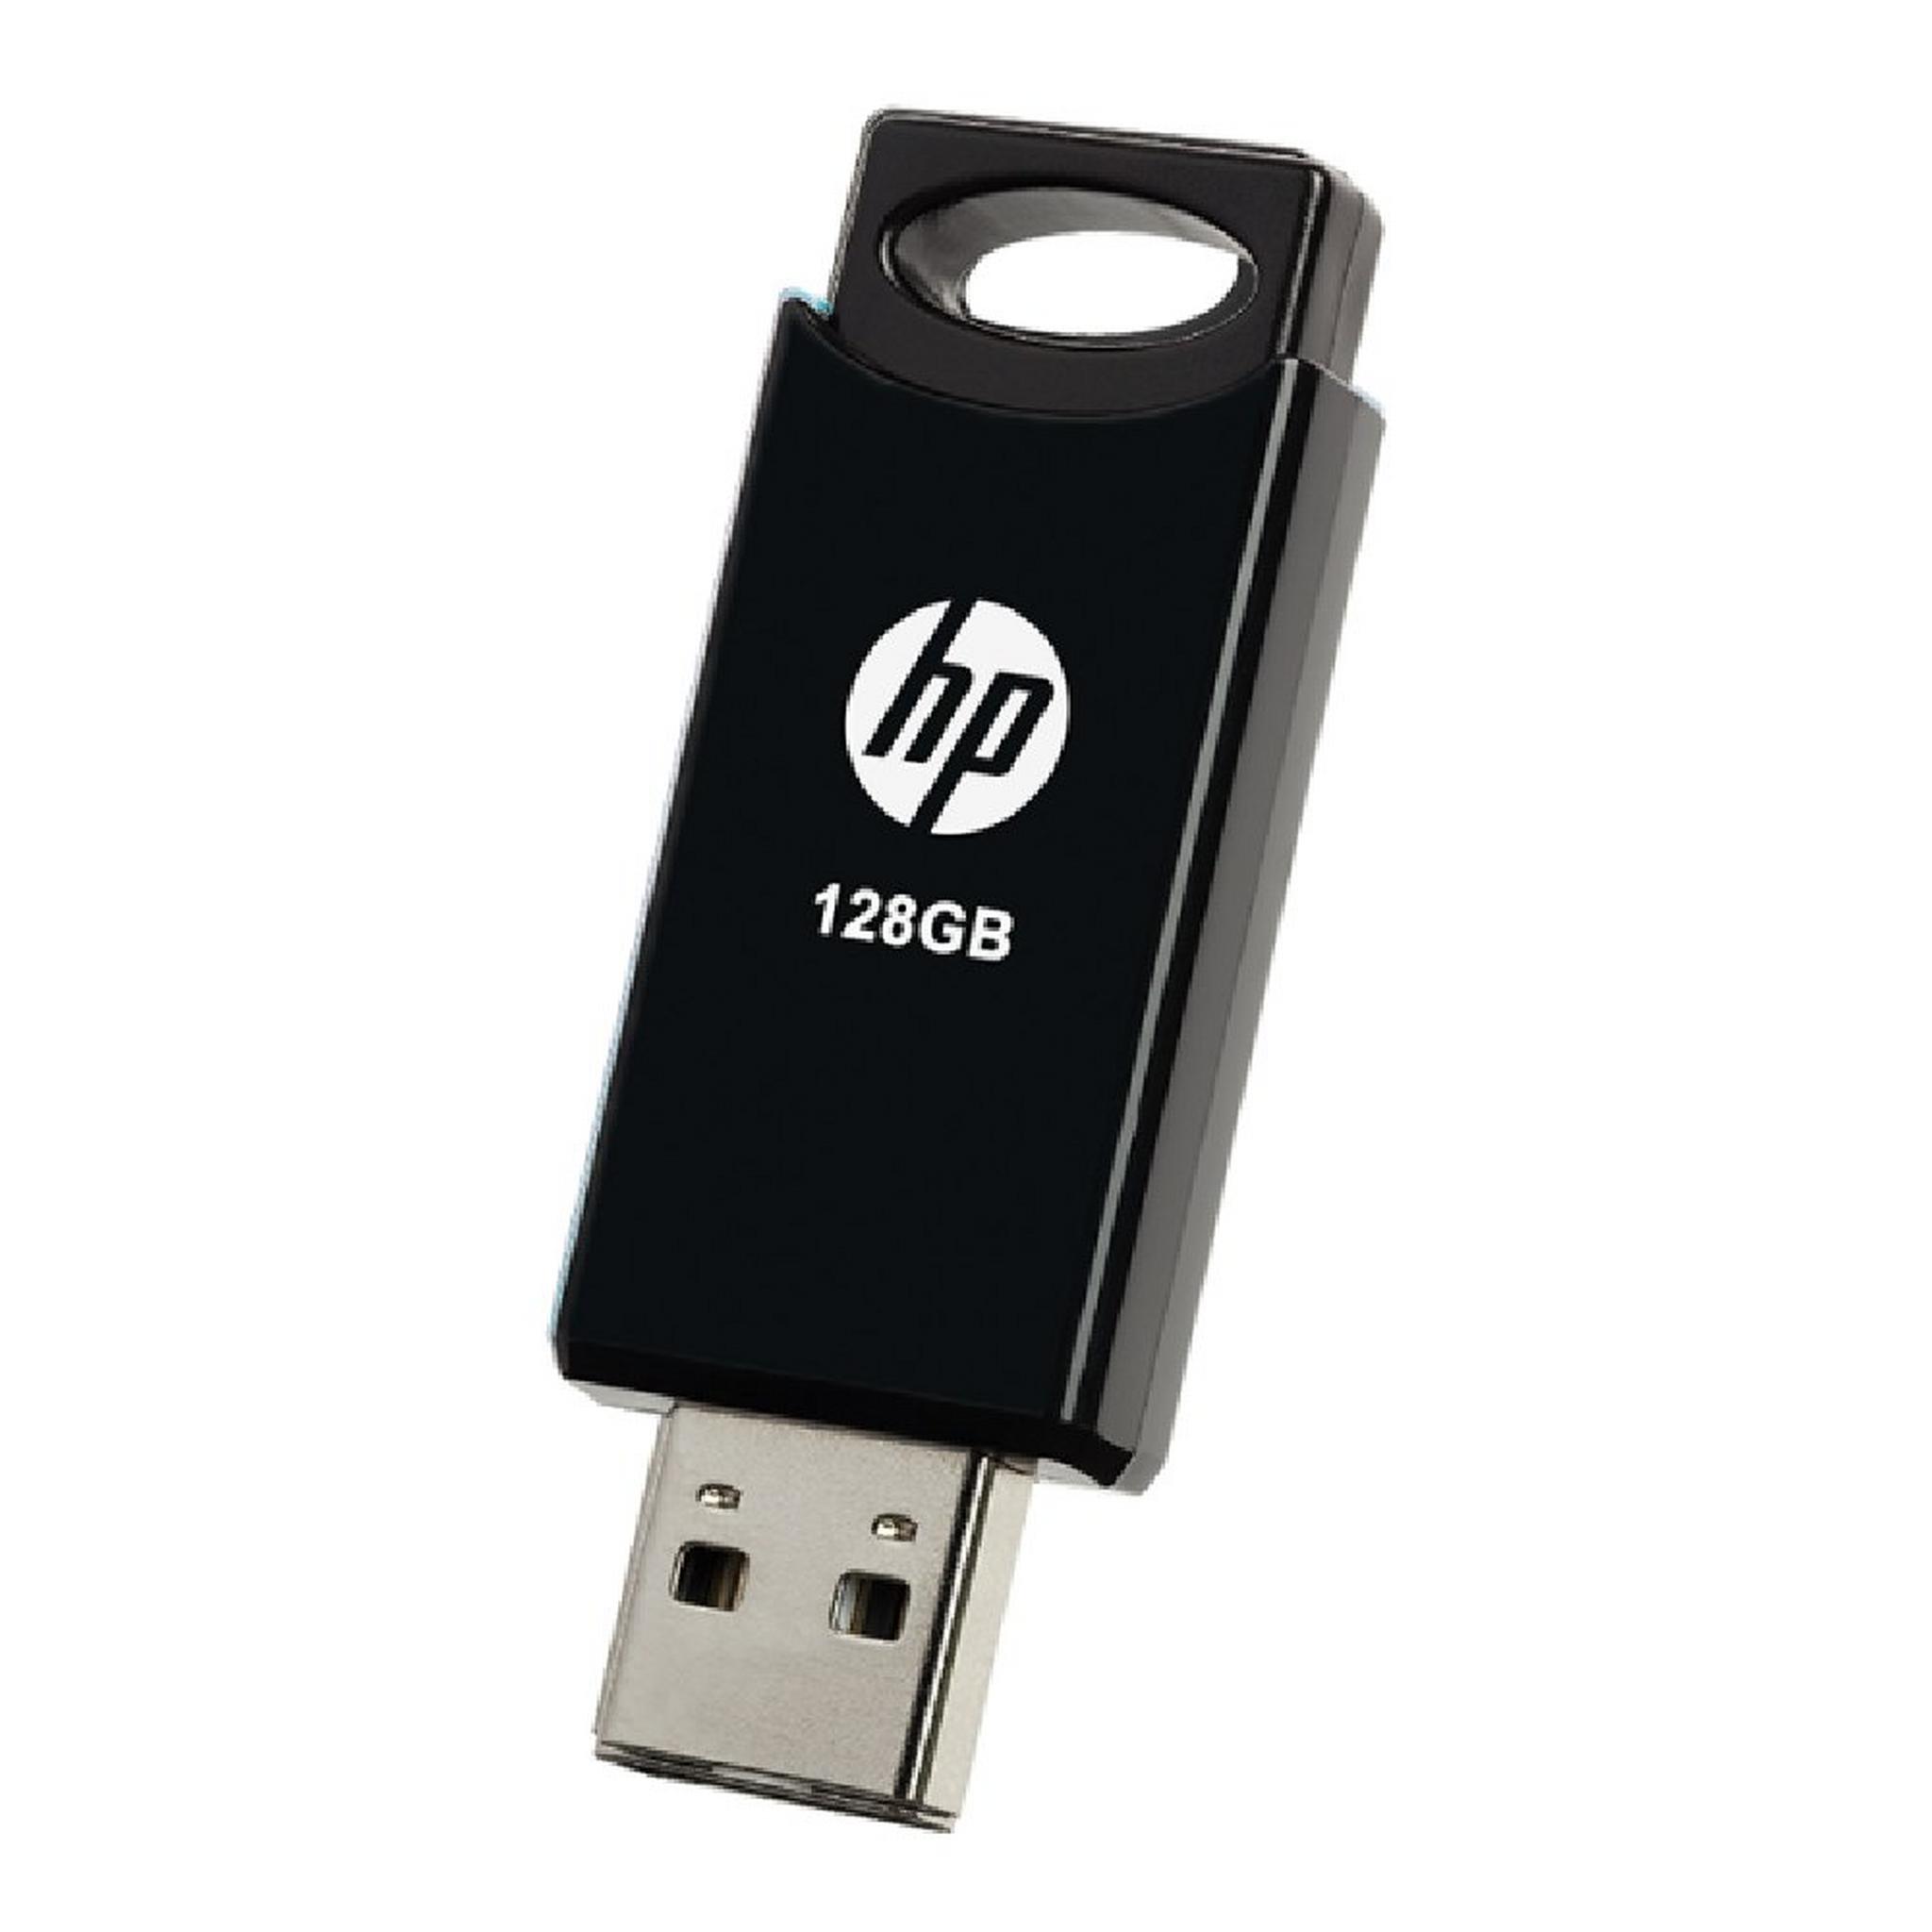 HP 2.0 128GB Flash Drive - HPFD212W128